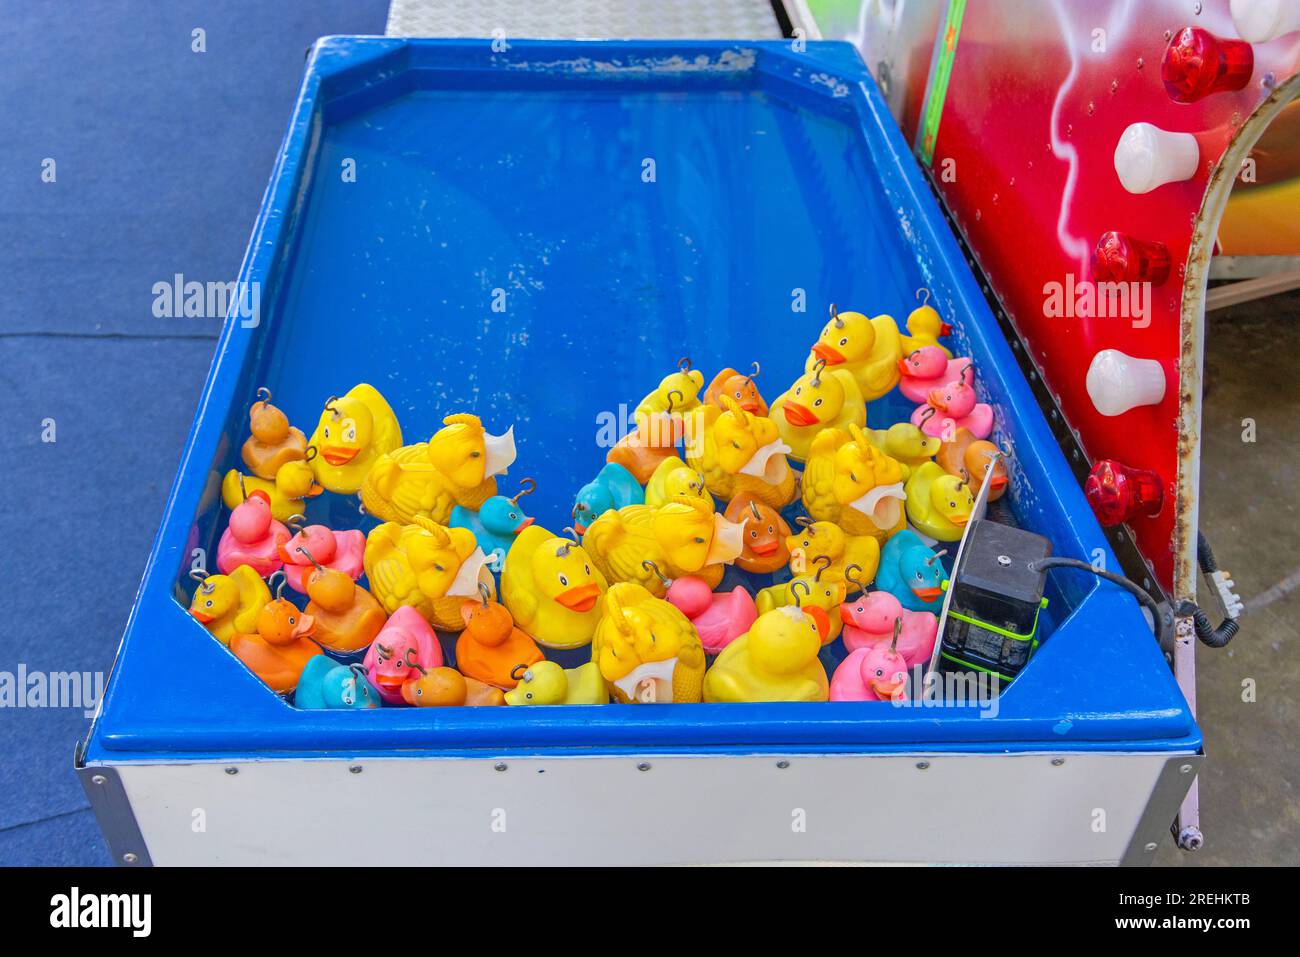 https://c8.alamy.com/comp/2REHKTB/yellow-rubber-ducks-in-pool-amusement-park-fishing-game-for-kids-2REHKTB.jpg